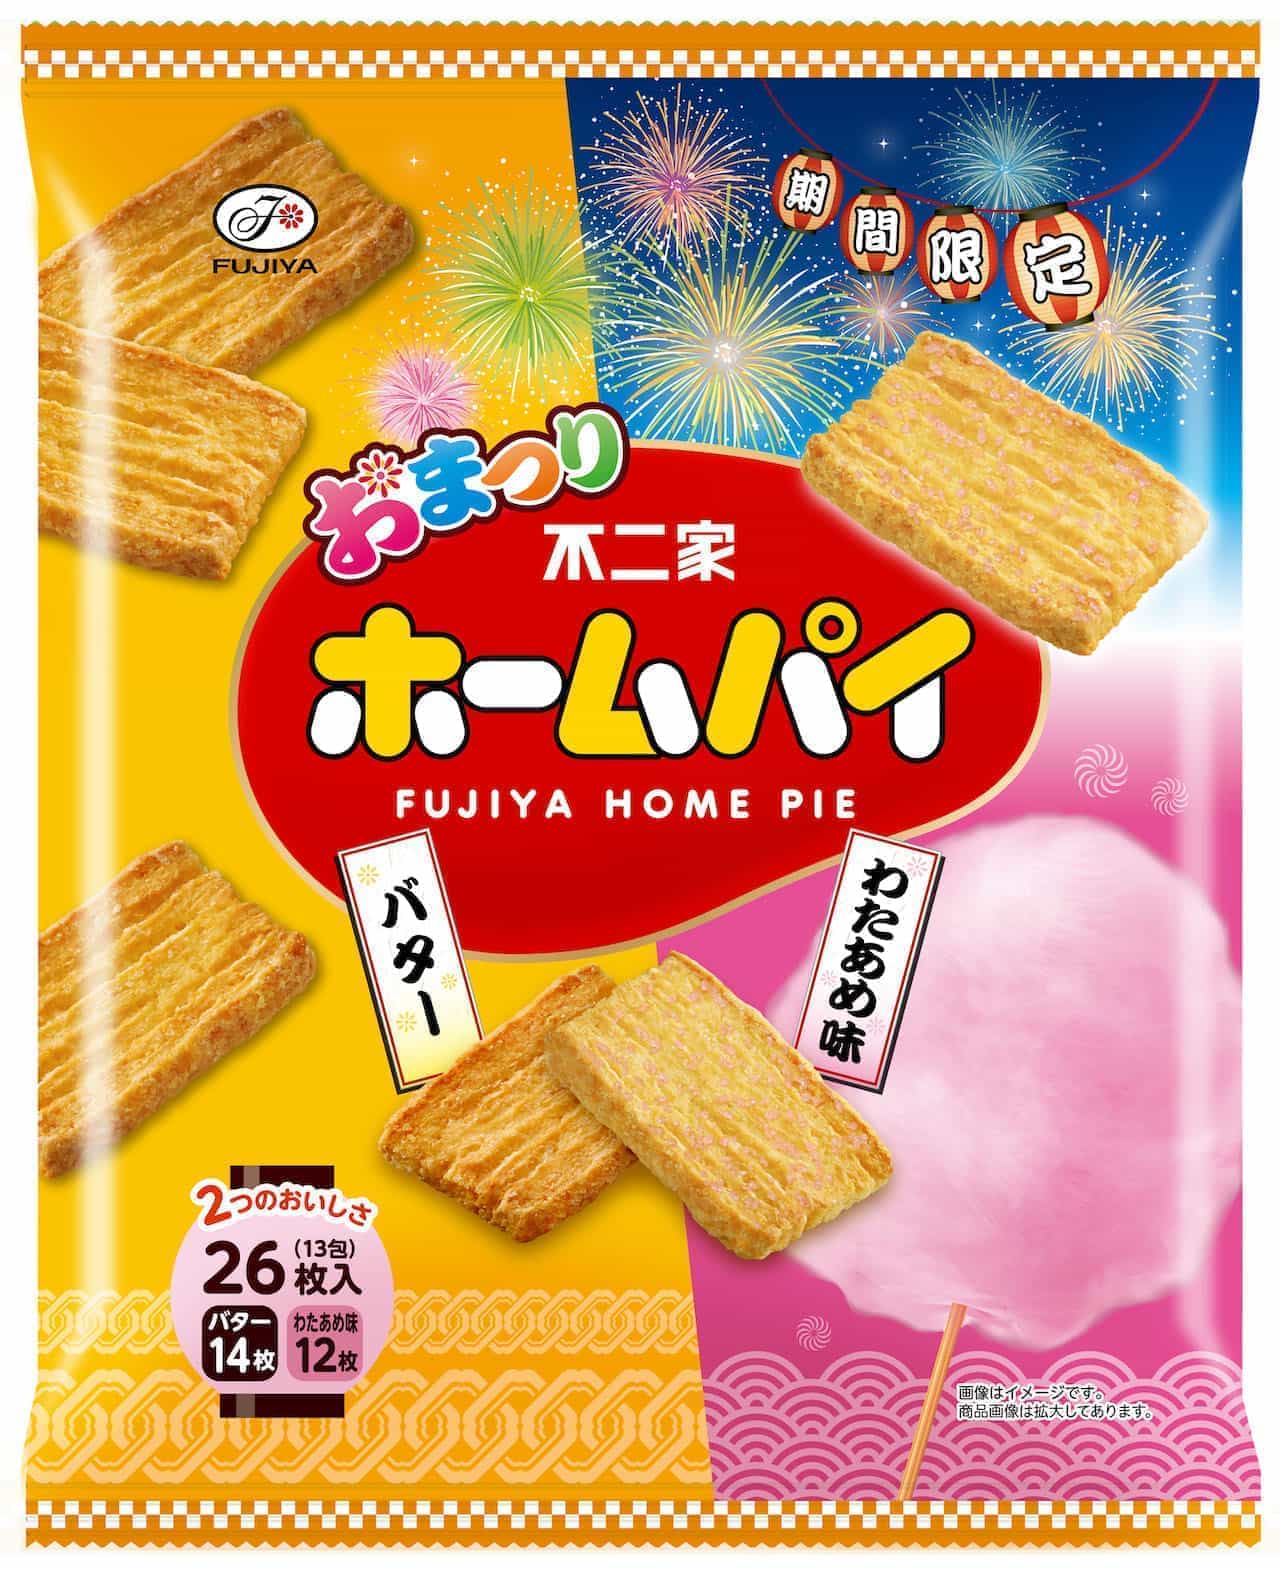 Fujiya "Home Pie (butter & cotton candy flavor)